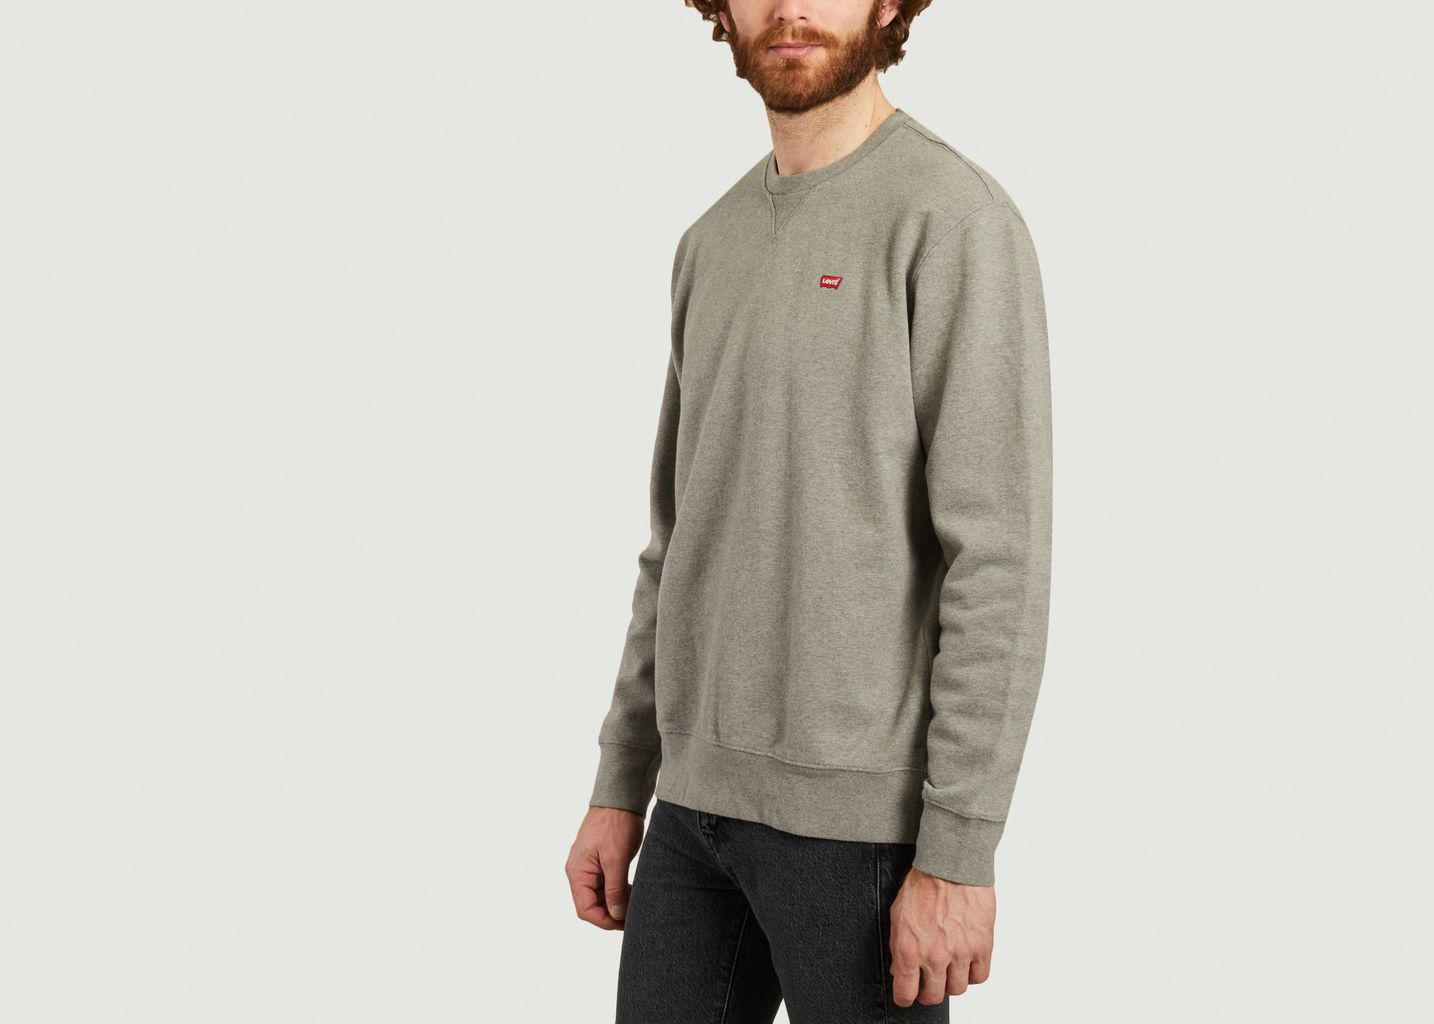 Cotton logo sweatshirt - Levi's Red Tab